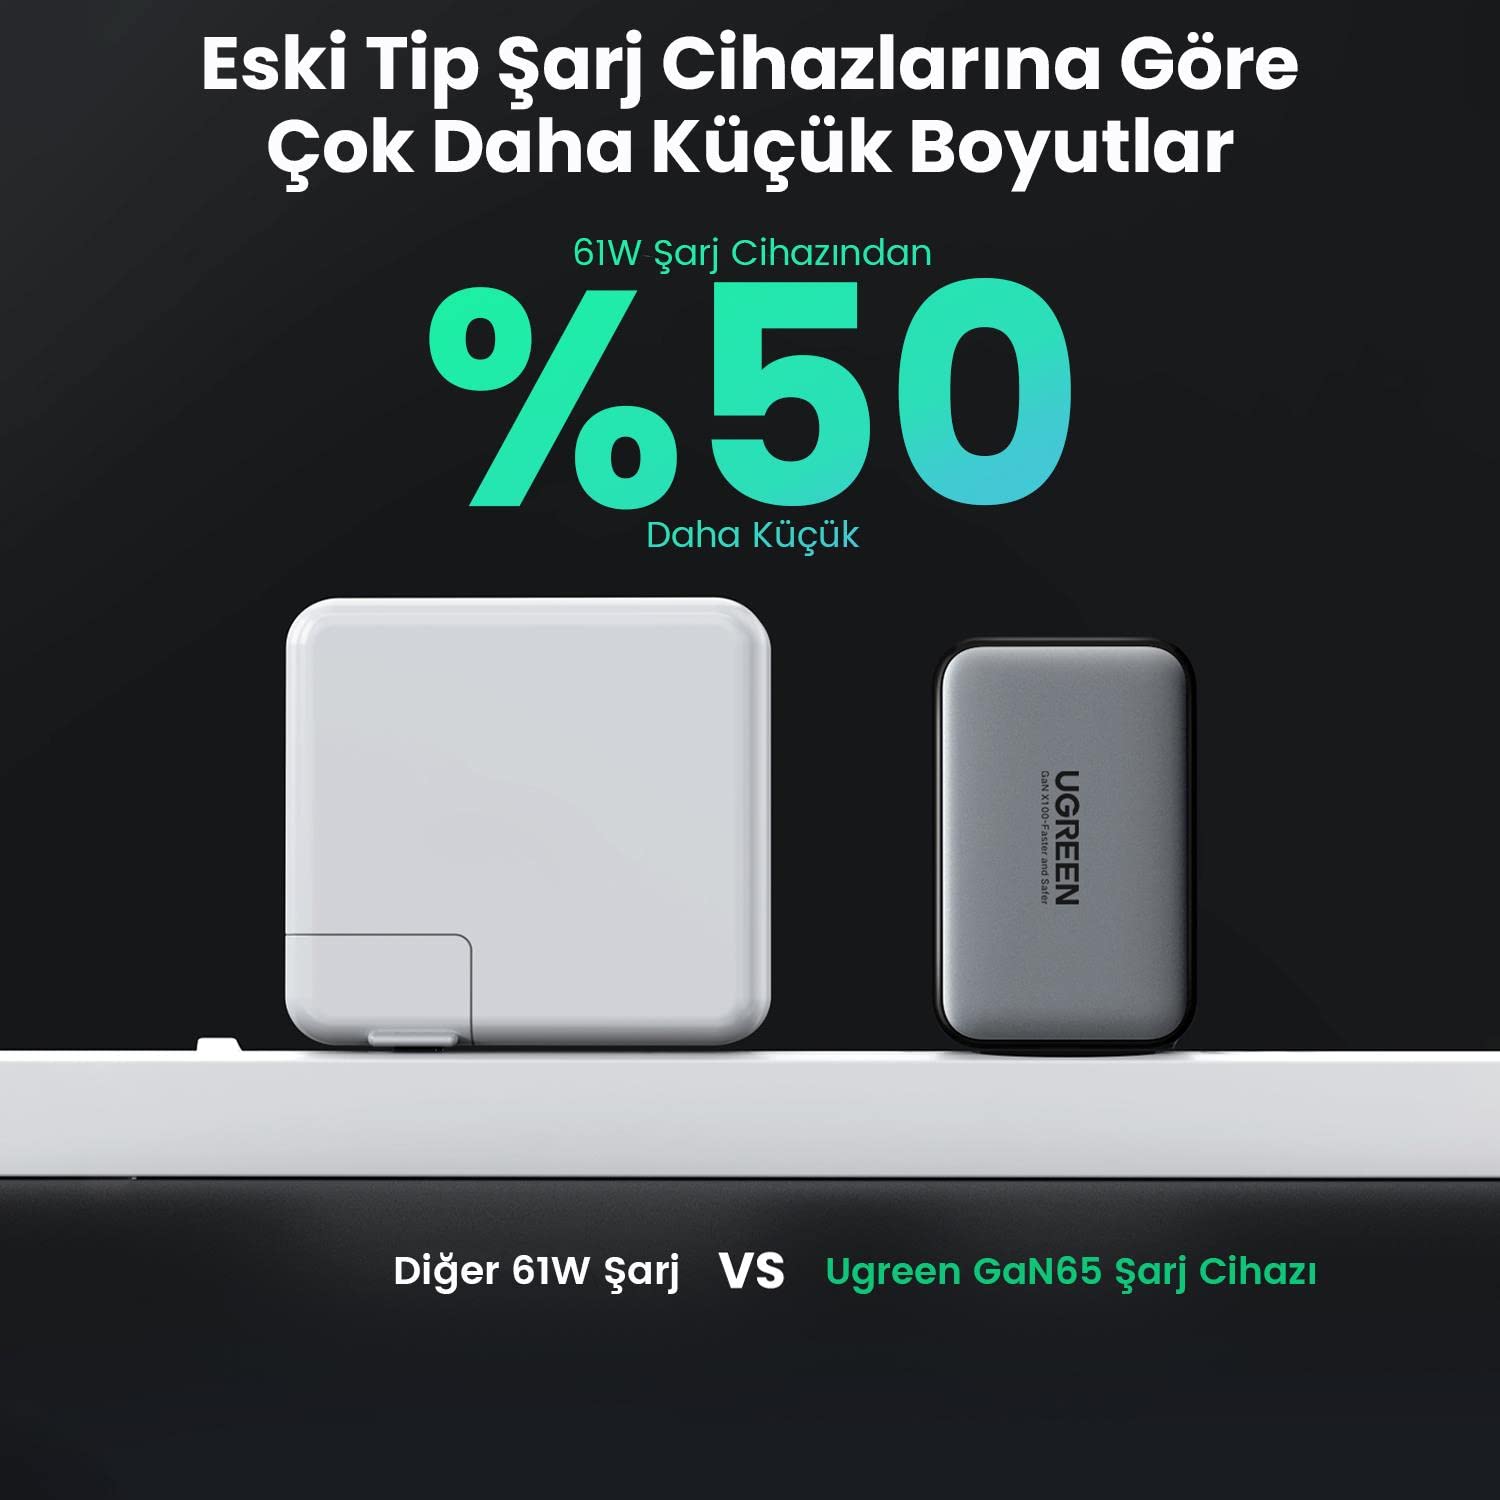 Ugreen 65W USB C Charging Station – UGREEN